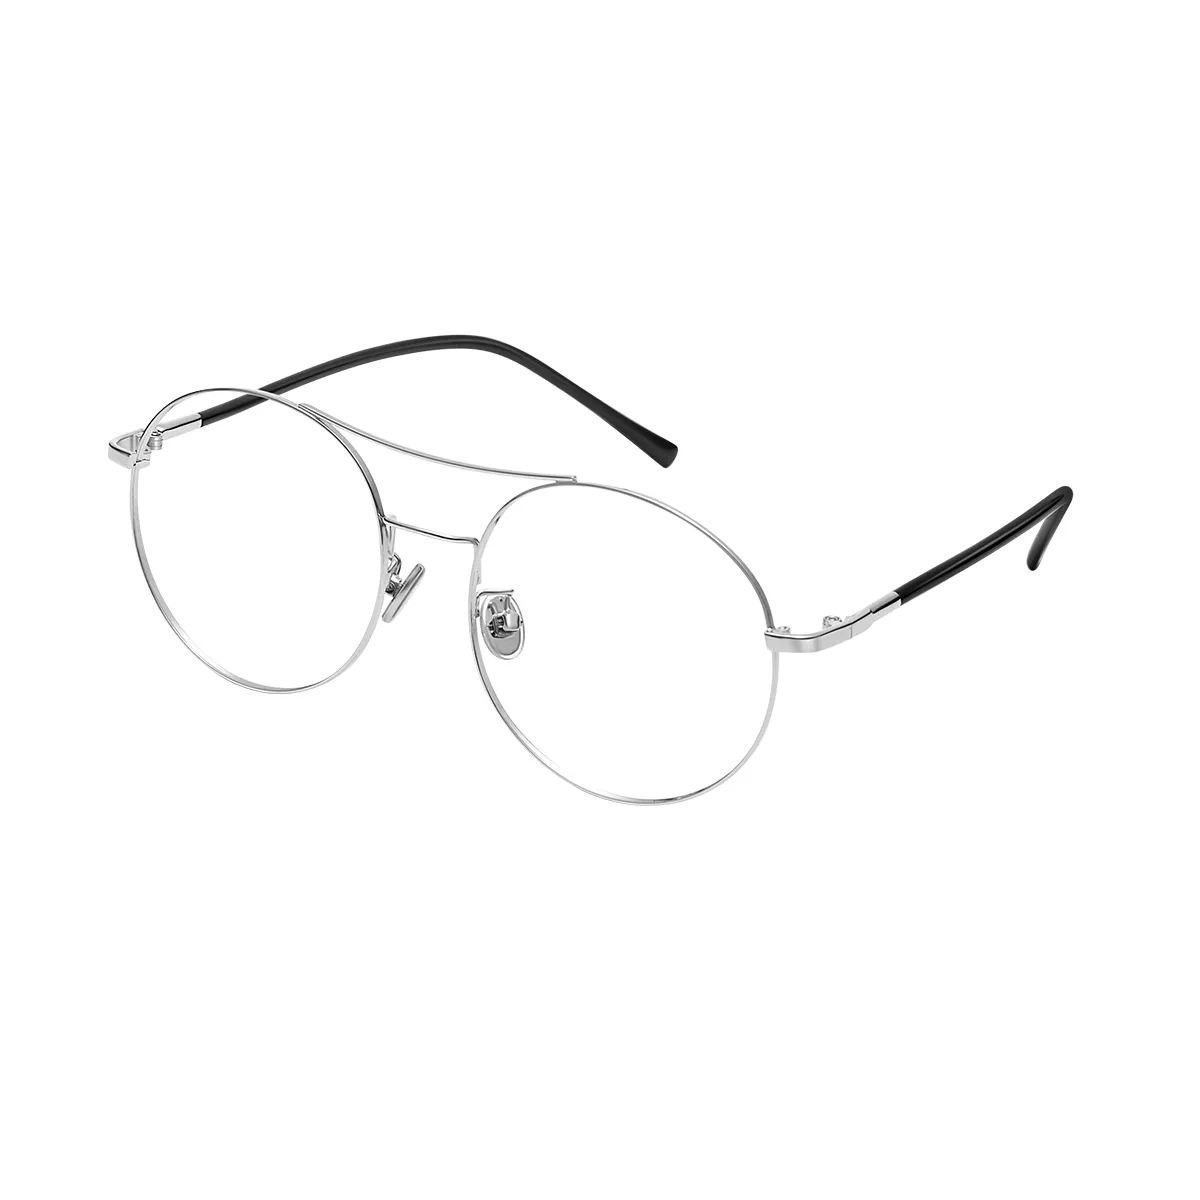 Artemis - Round Silver Glasses for Women - EFE